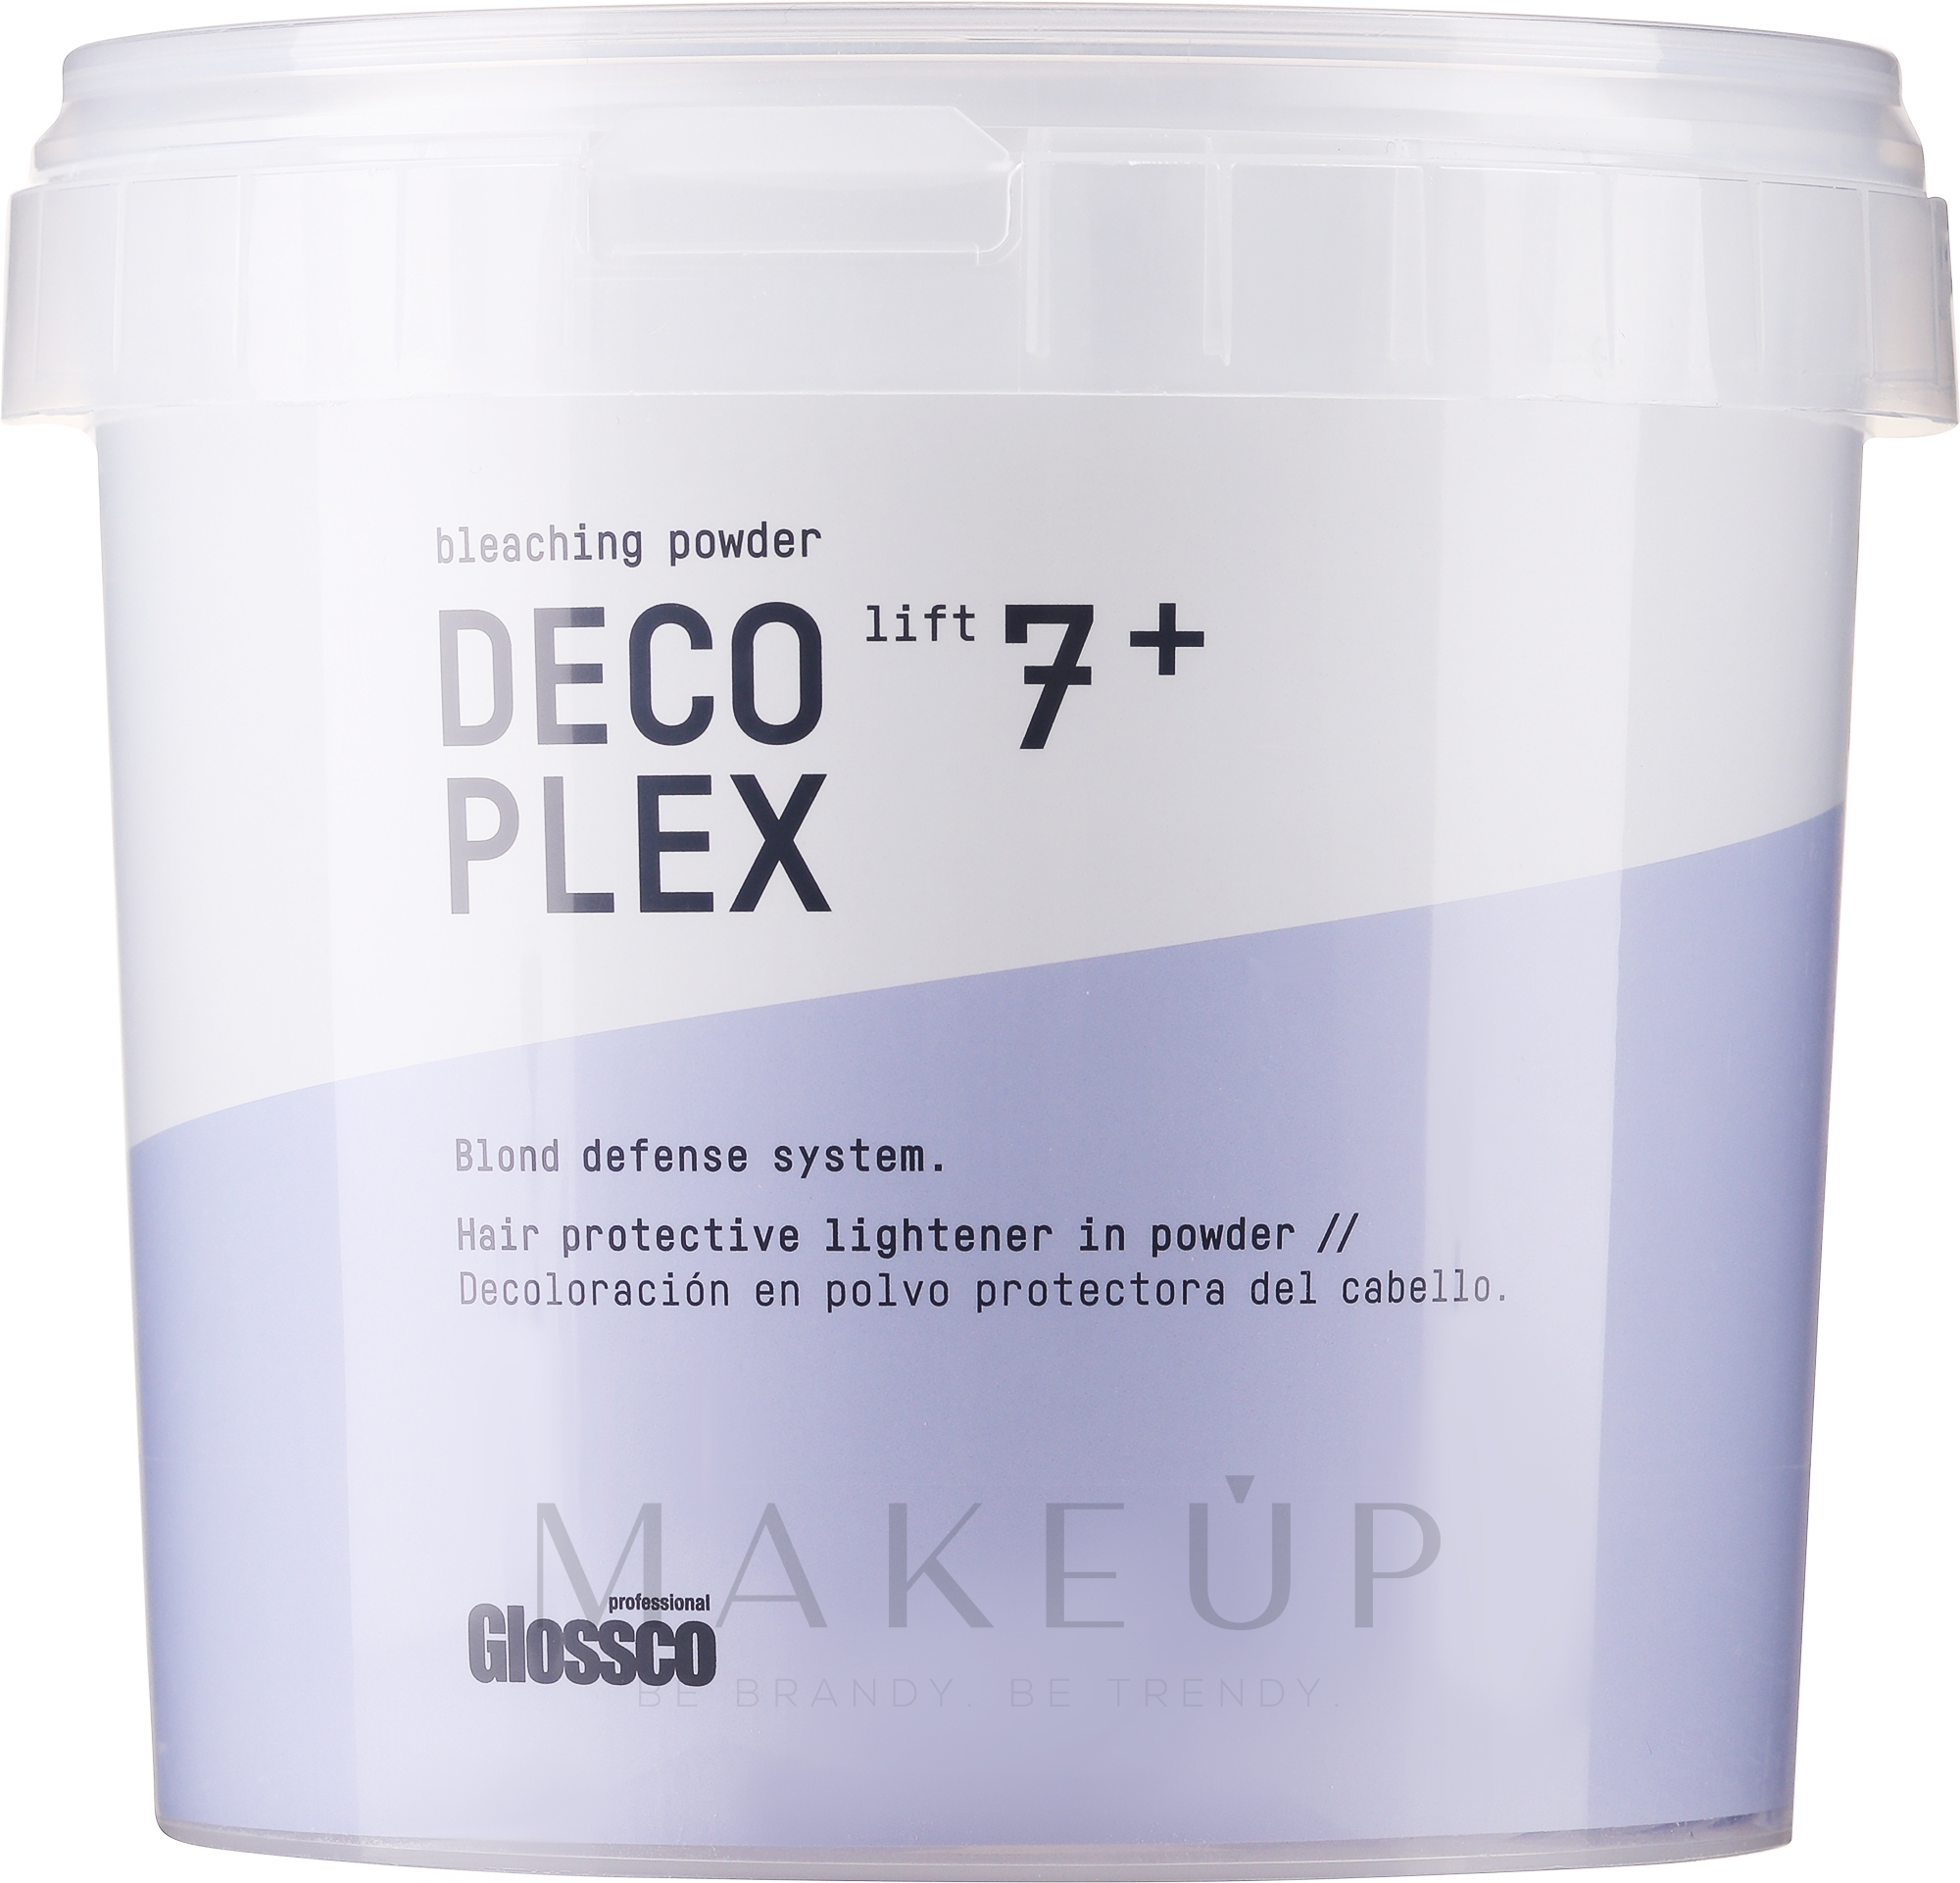 Leuchtendes Haarpuder - Glossco Color DecoPlex Light 7+ Blond Defense System — Bild 1000 g